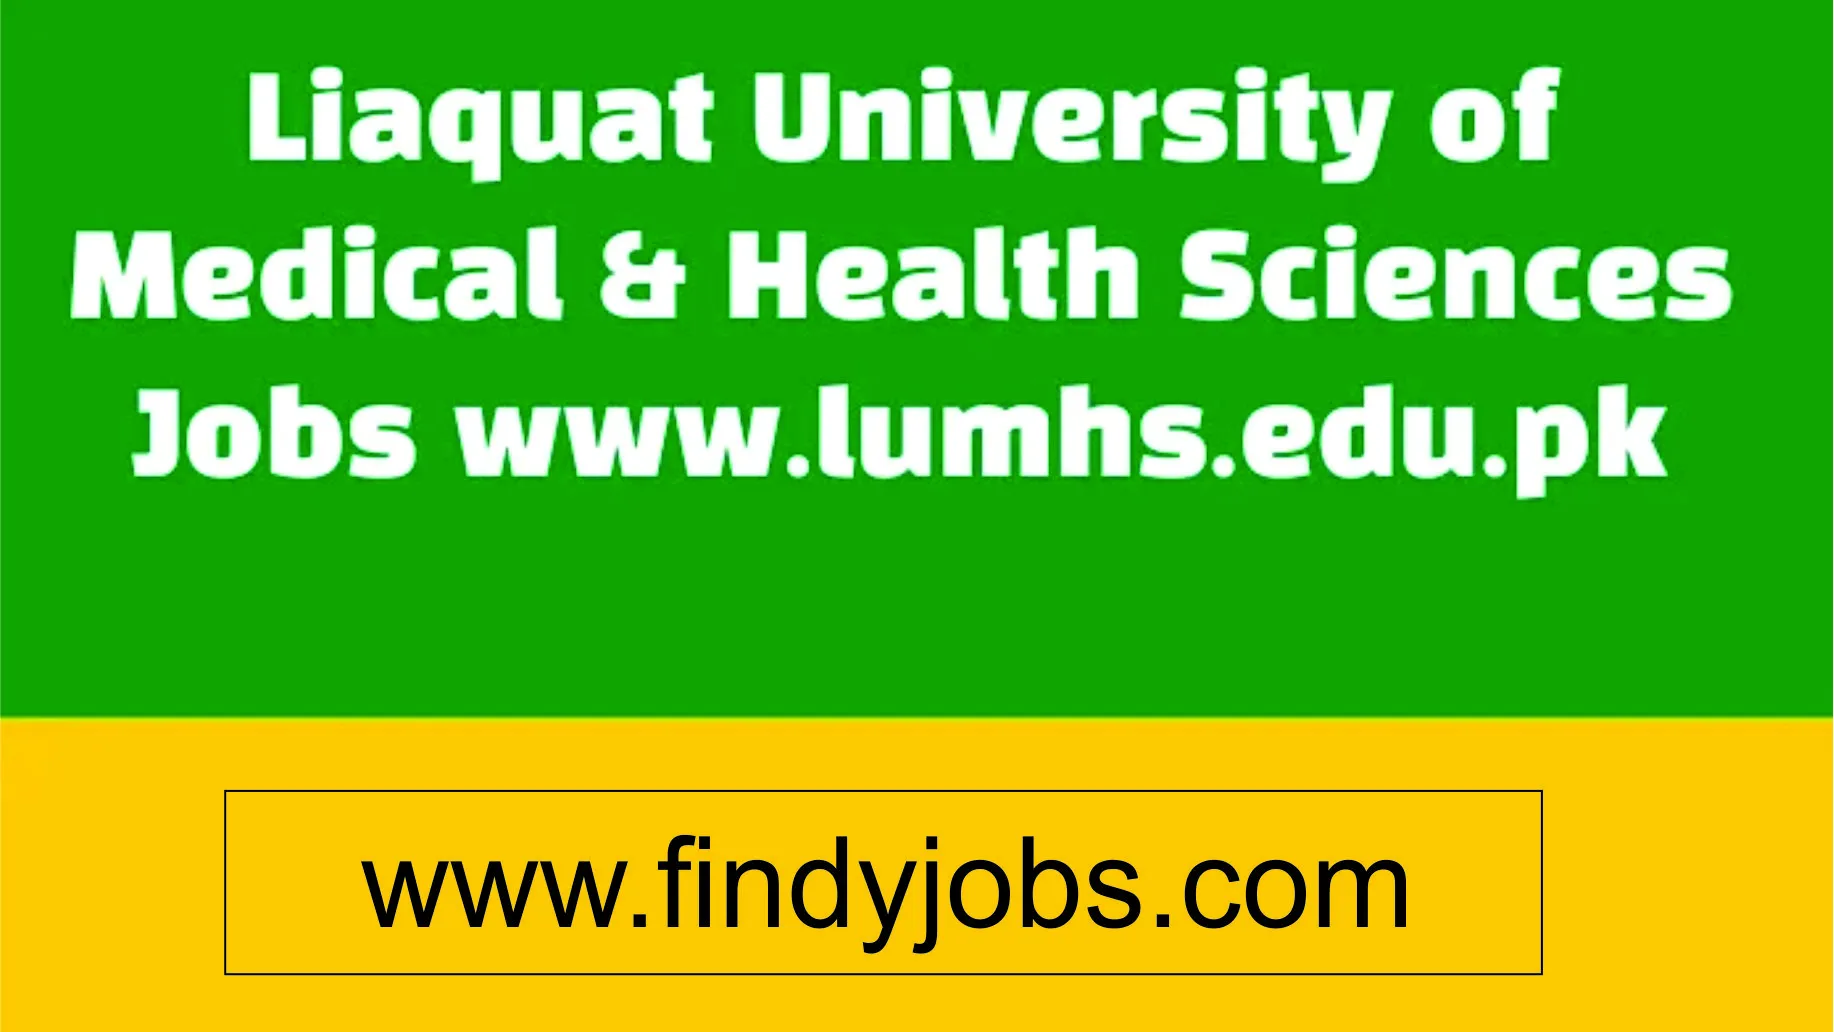 Liaquat University of Medical & Health Sciences Jobs | www.lumhs.edu.pk